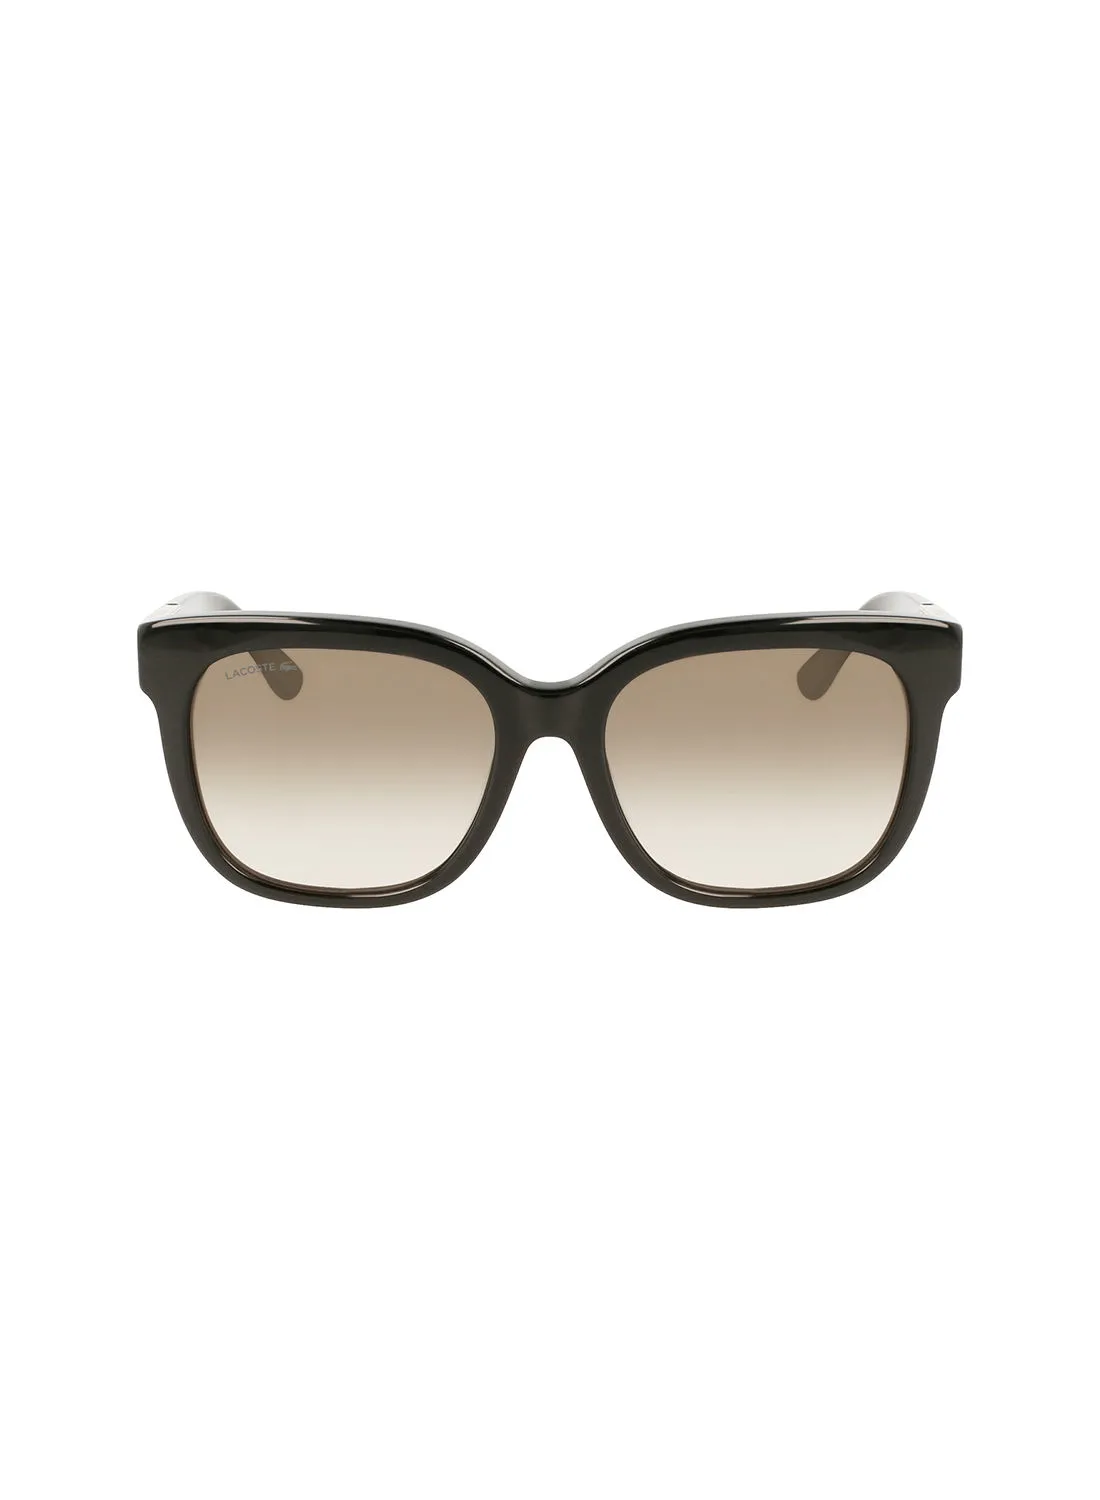 LACOSTE UV Rays Protection Eyewear Sunglasses L970S-001-5519